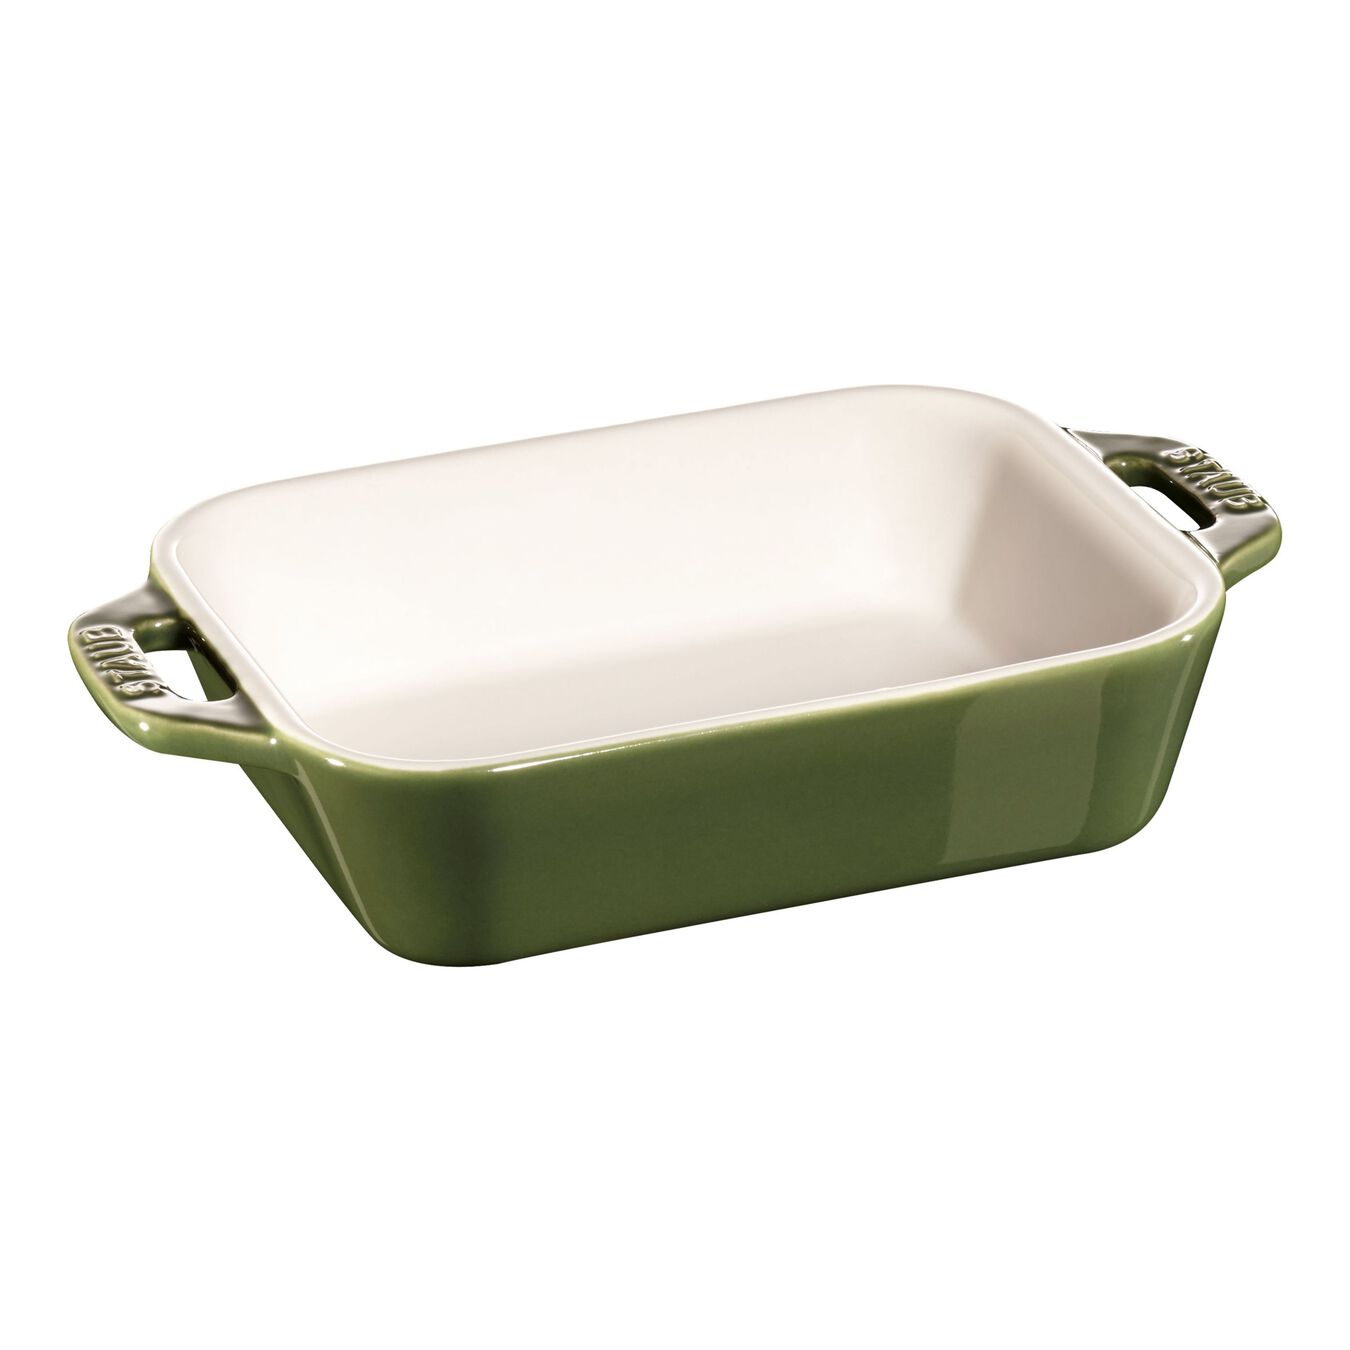 14 cm x 11 cm rectangular Ceramic Oven dish basil-green,,large 1